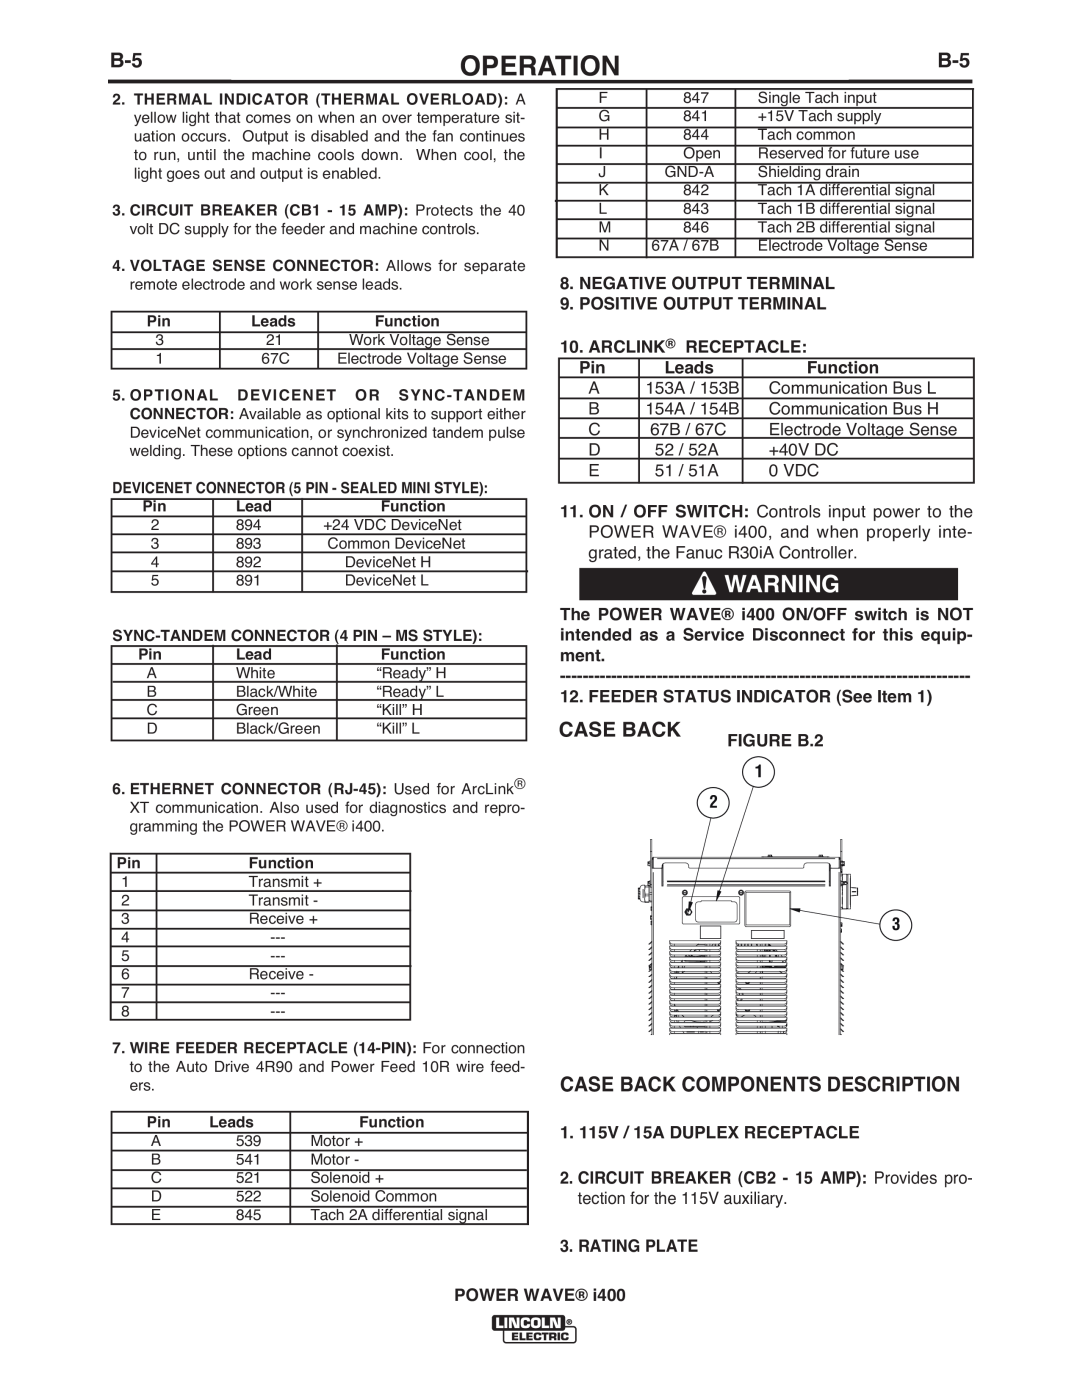 Lincoln Electric IM986 manual Case Back Components Description, Operation 